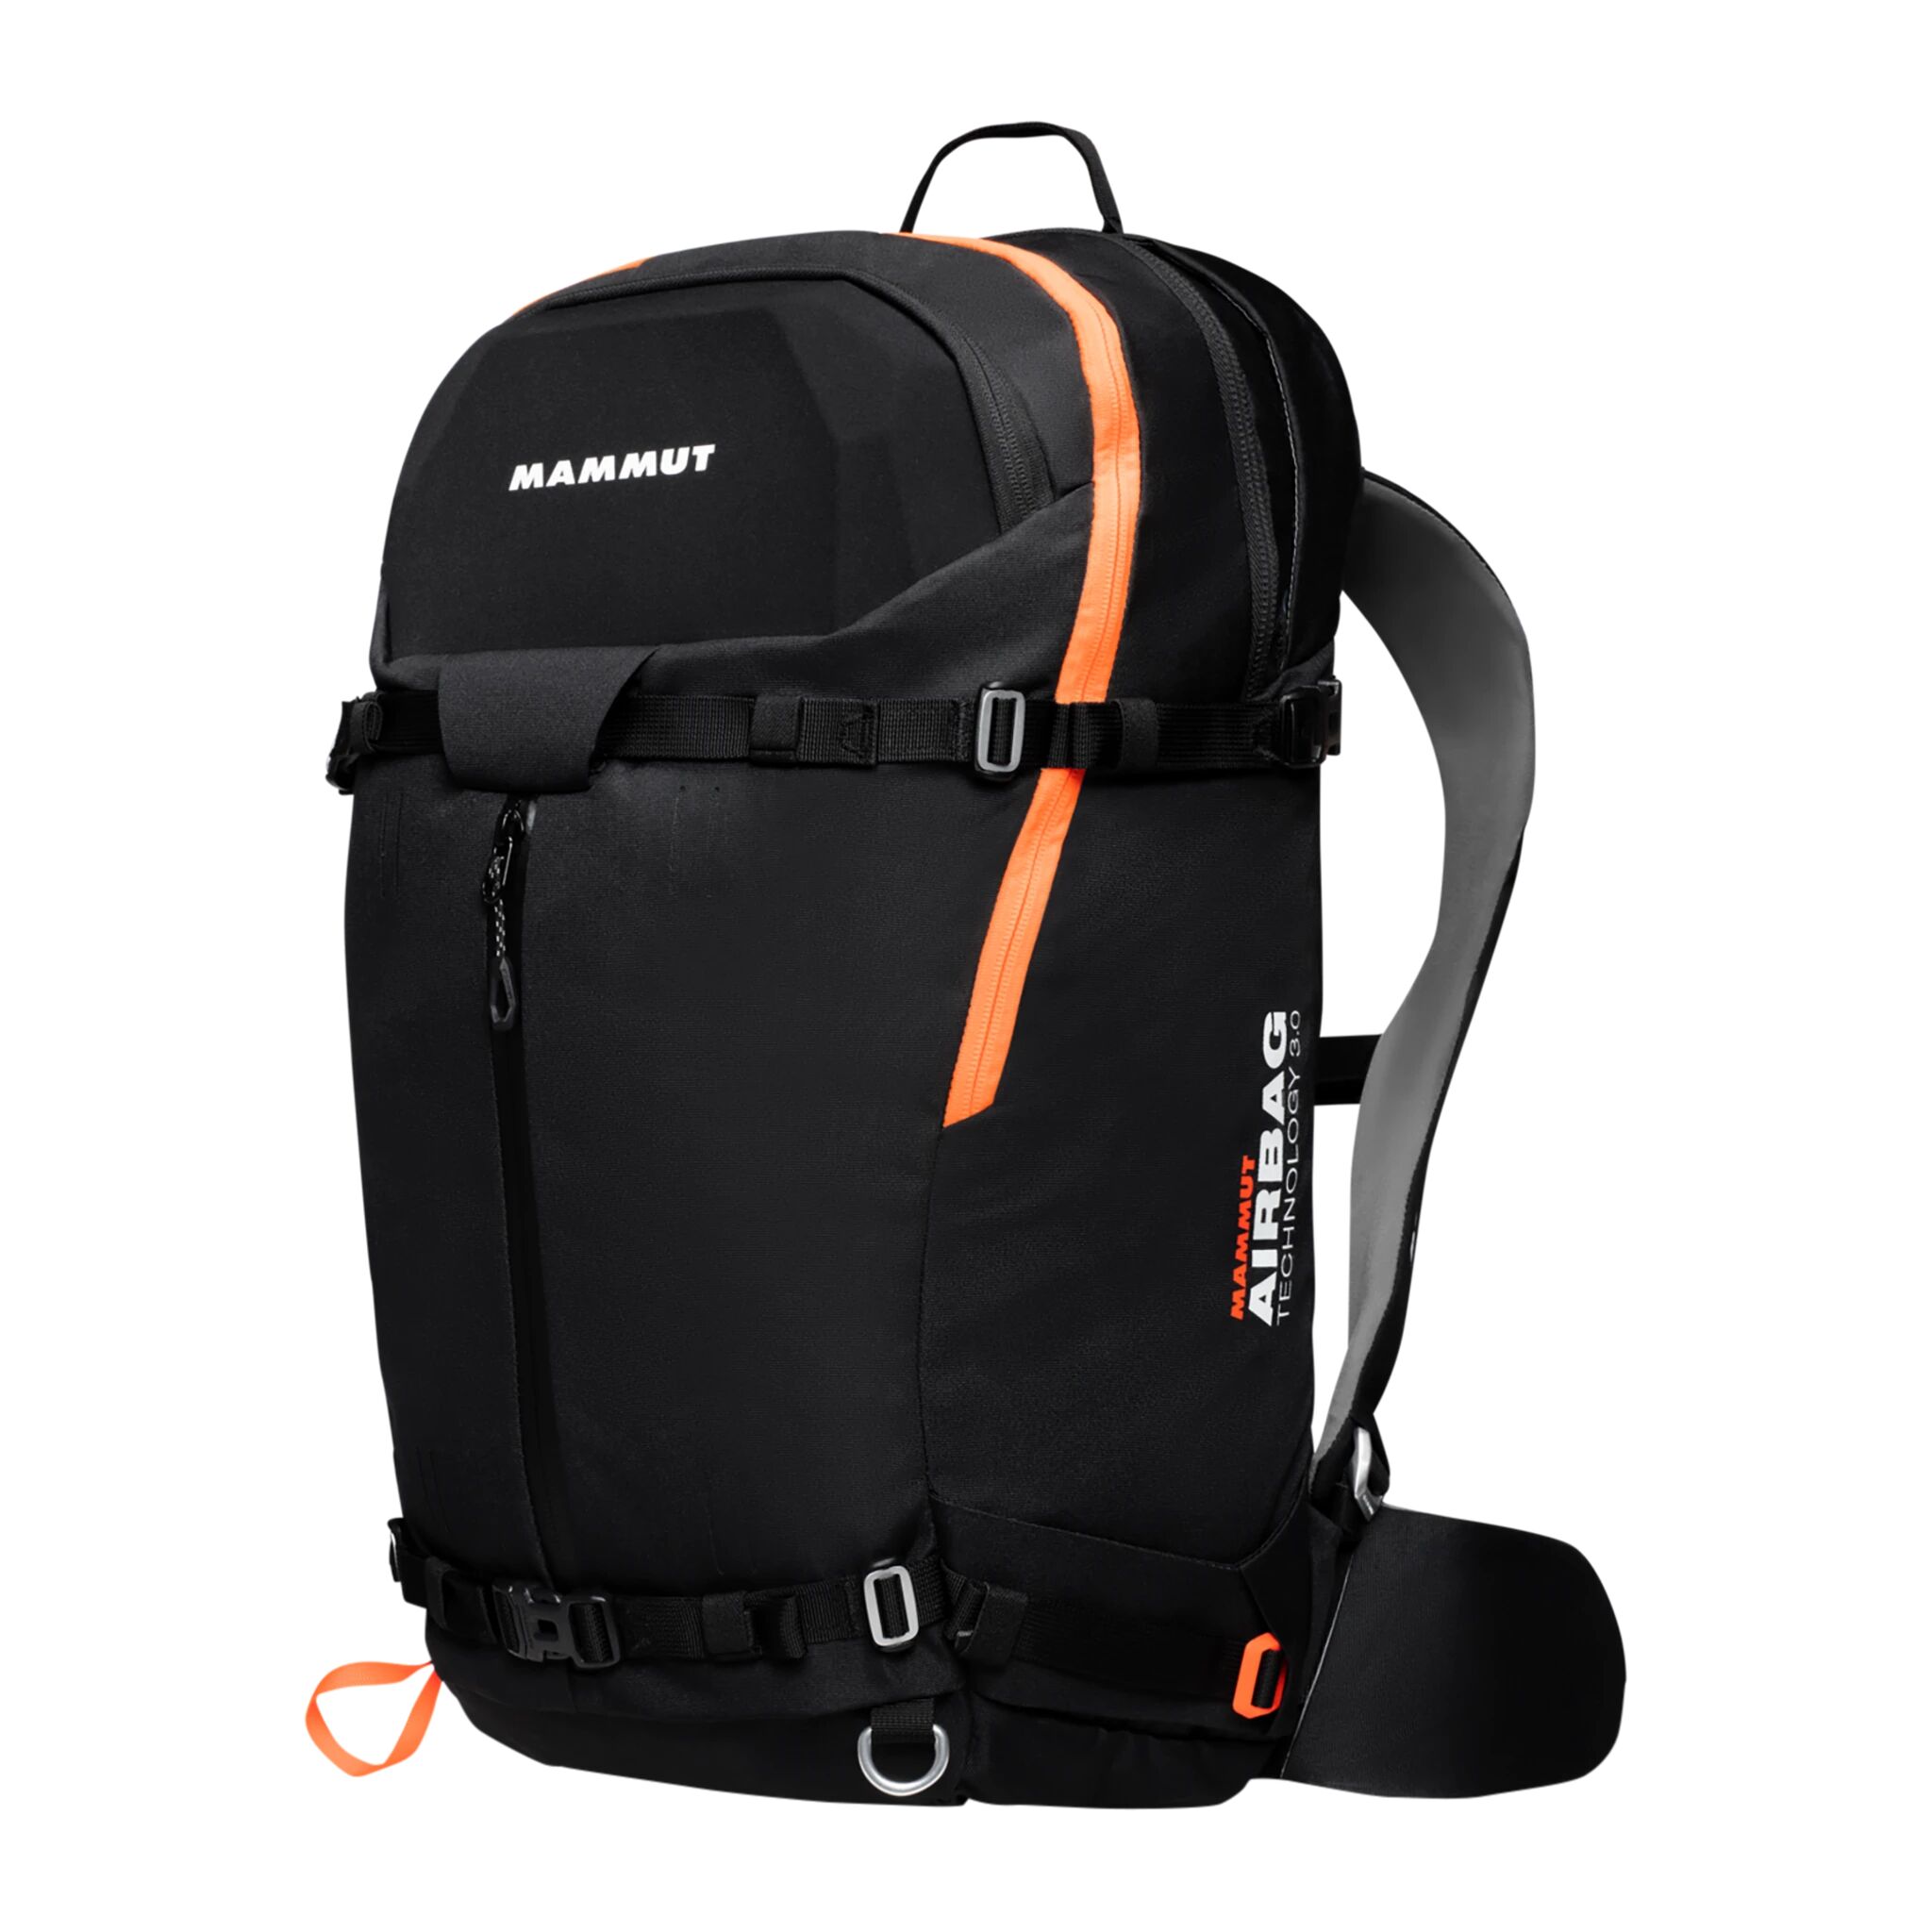 Mammut Pro X Removable Airbag 3.0 / .35 L, skredsekk herre 35 L Black-Vibrant Orange